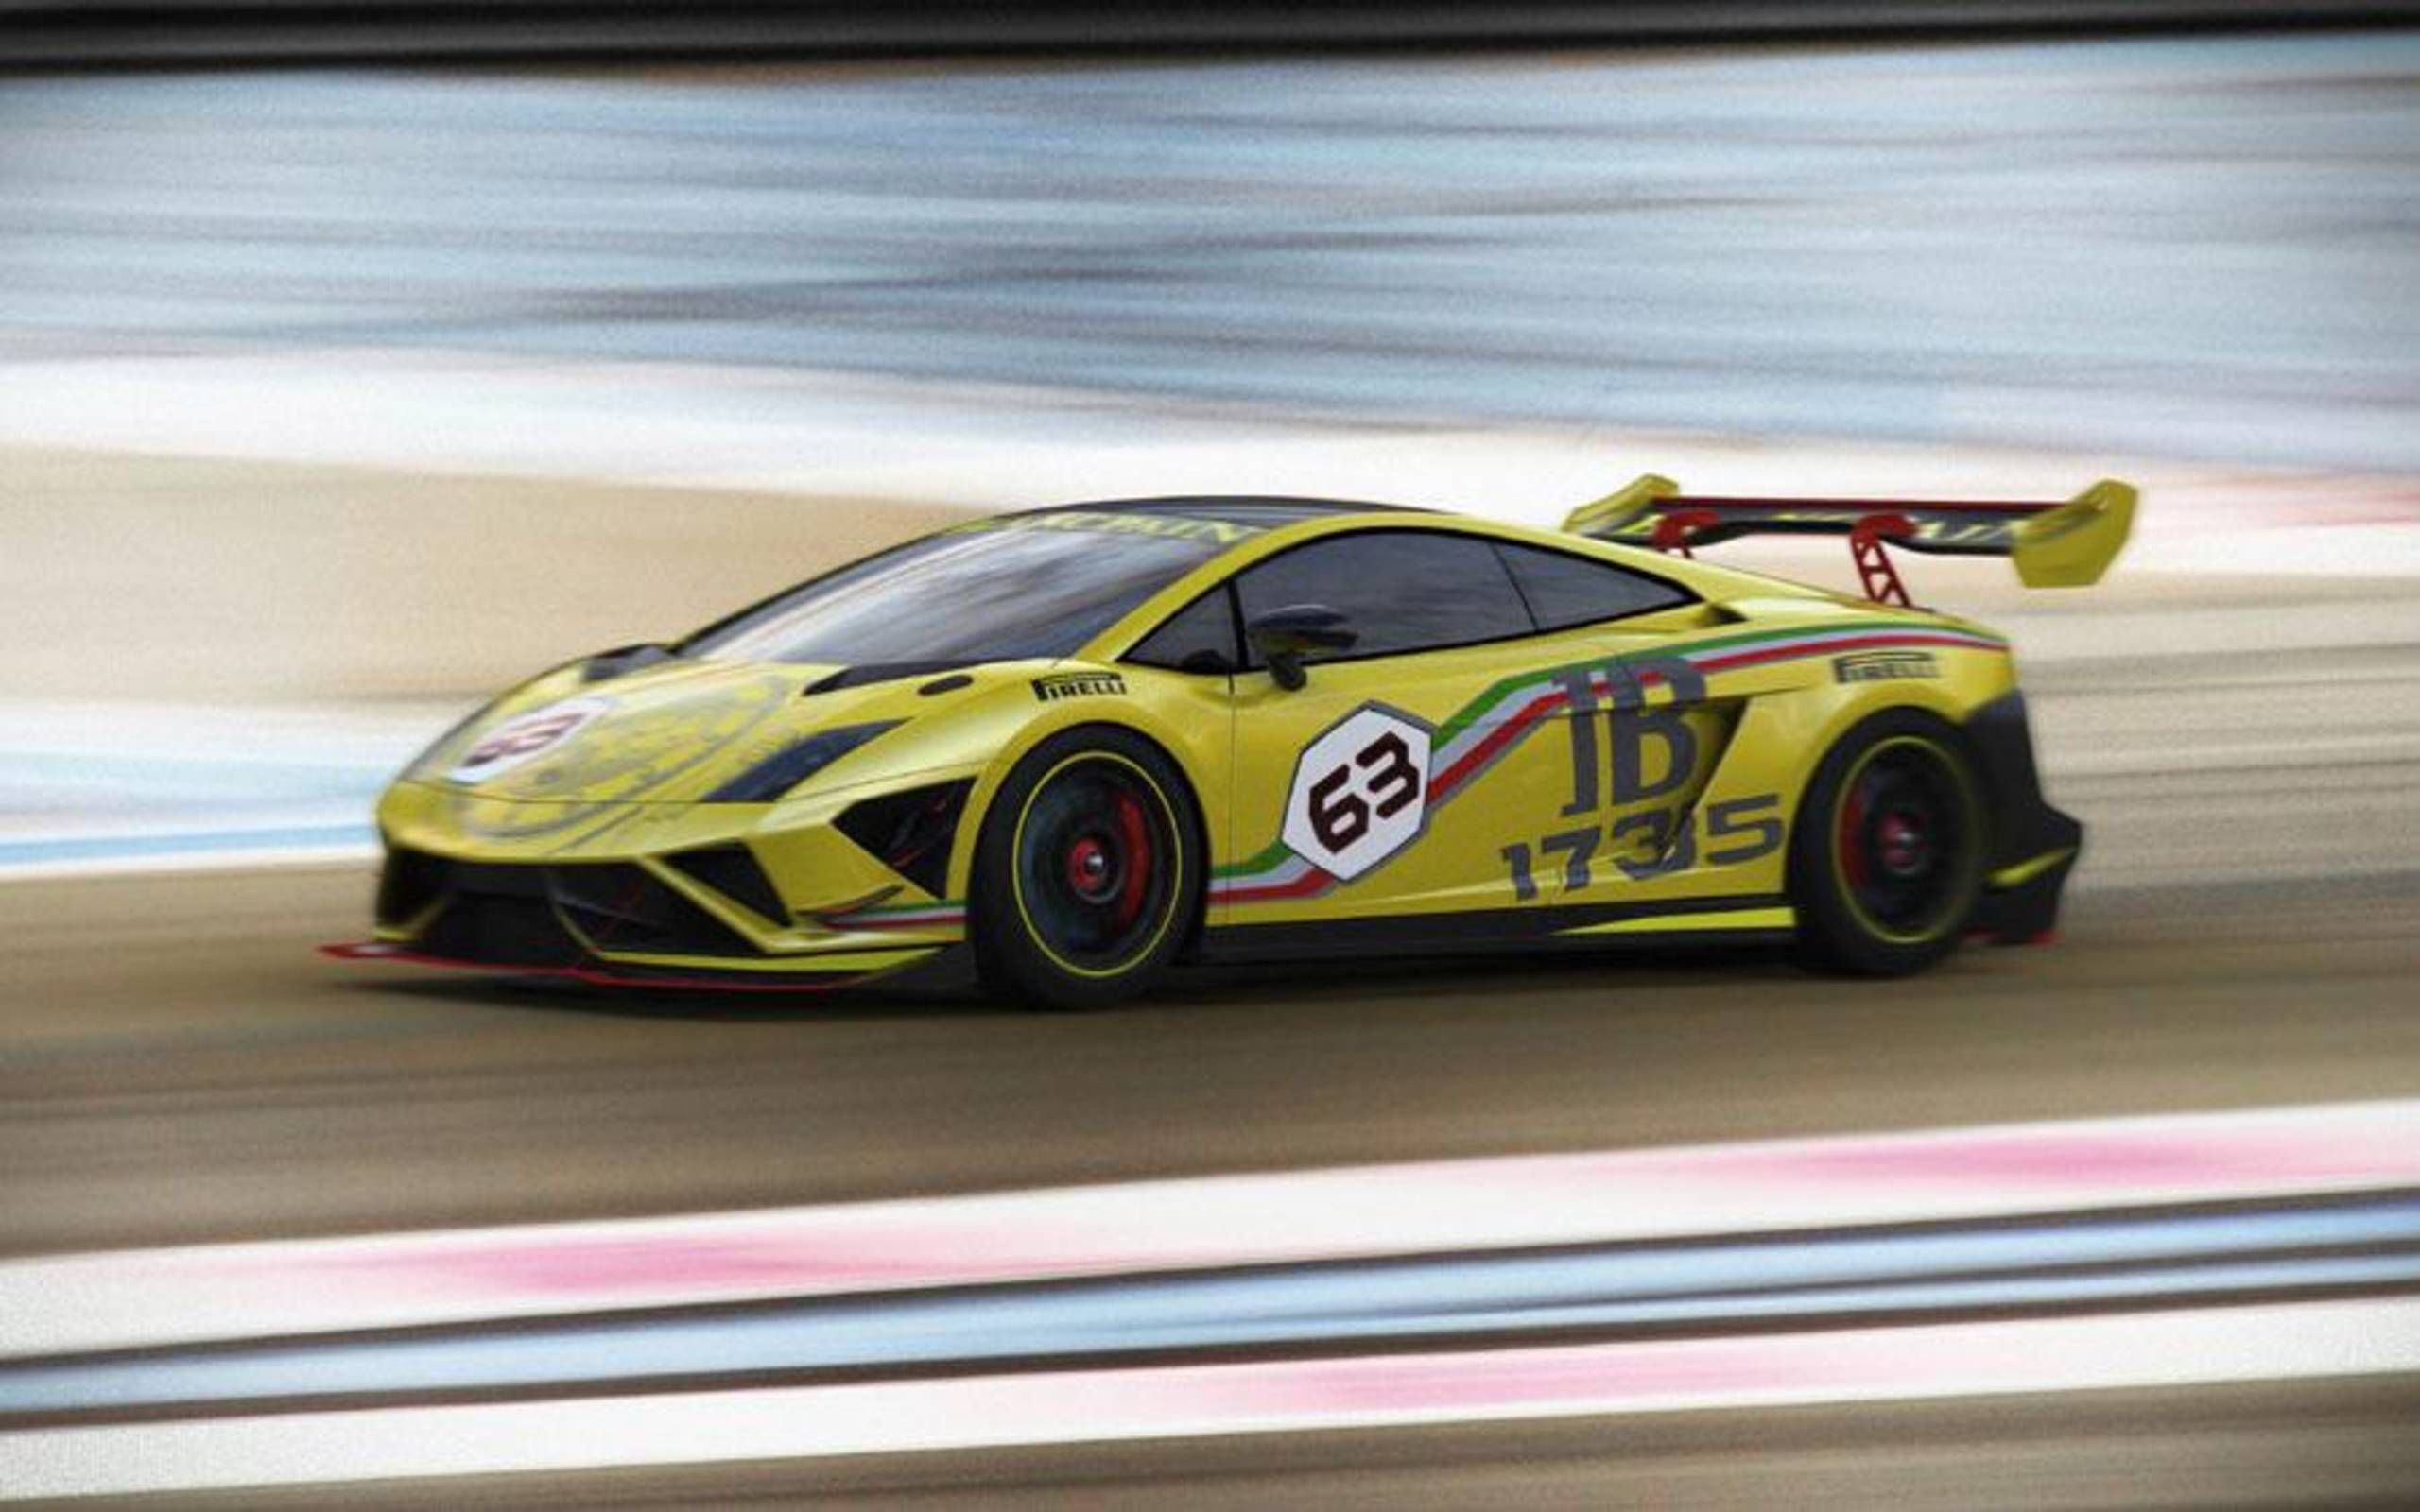 New Lamborghini Gallardo Super Trofeo introduced for race series